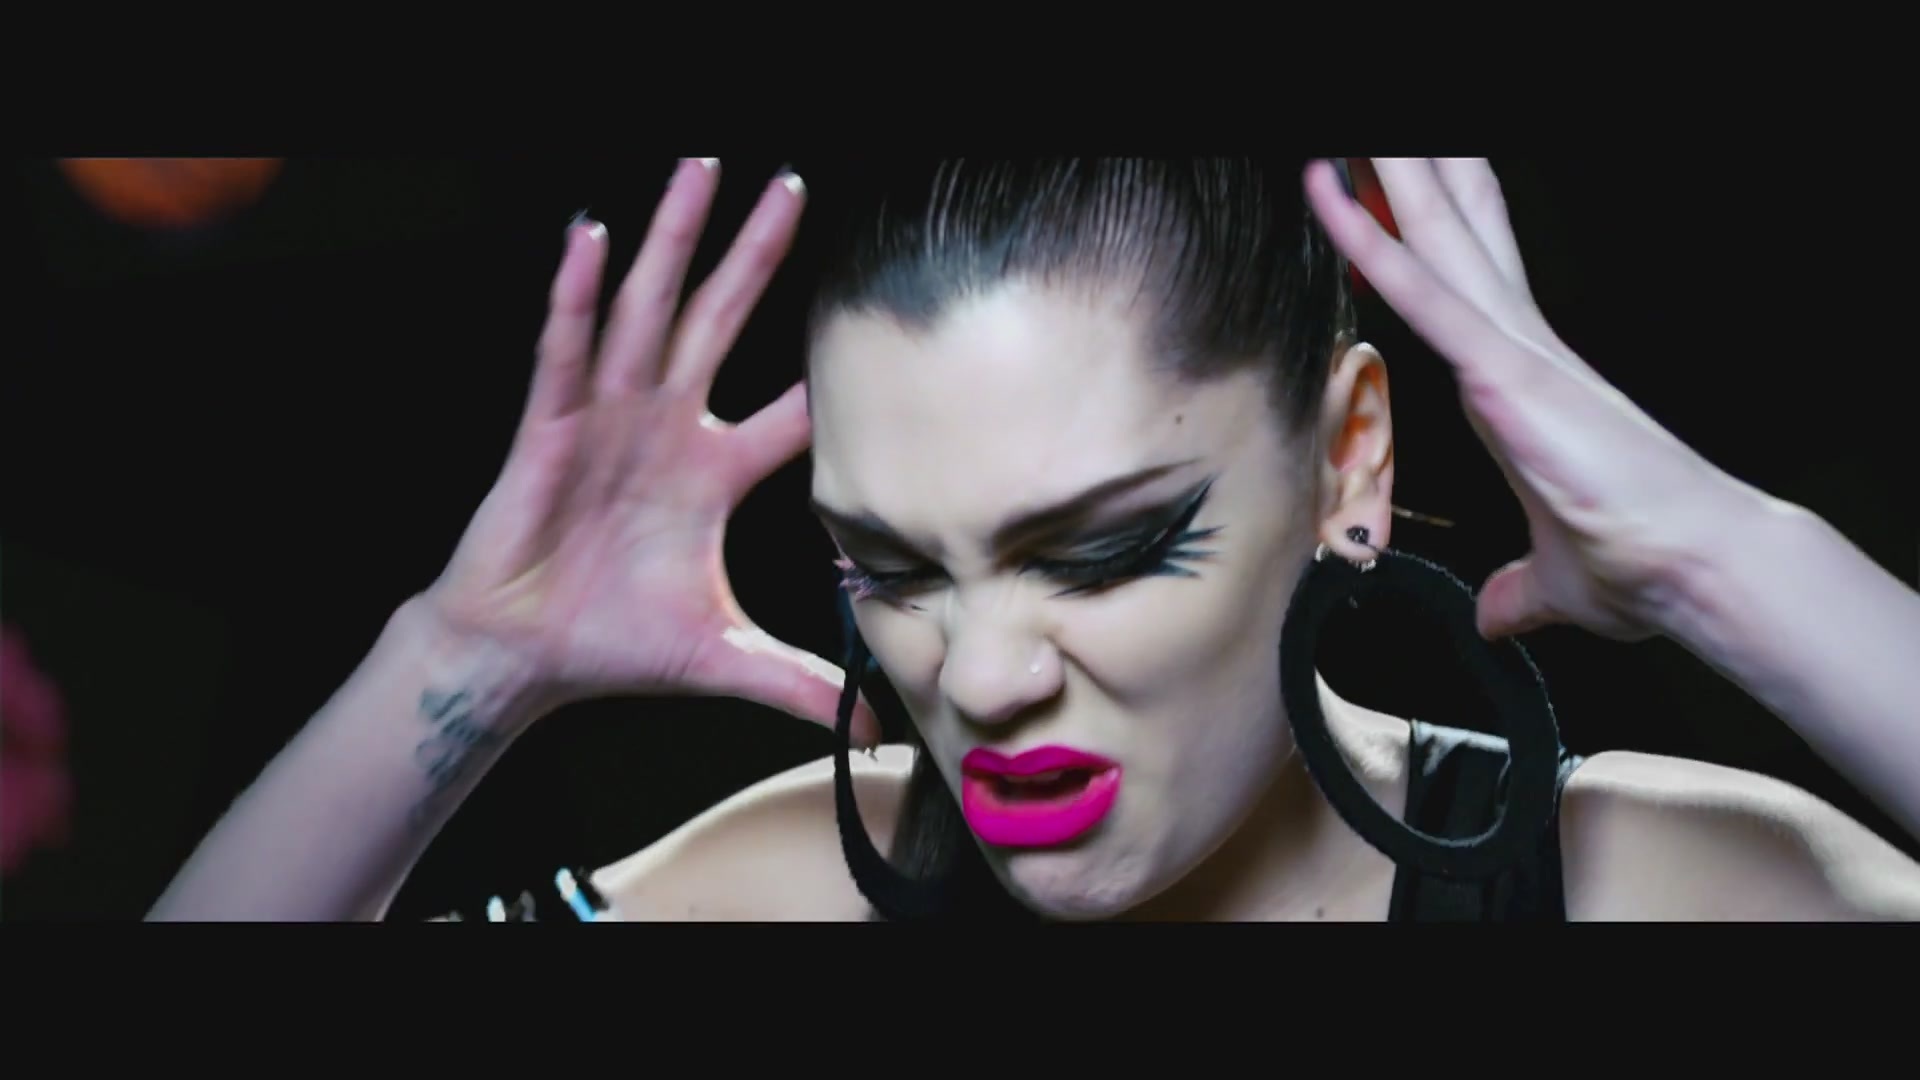 Nobody's Perfect [Music Video] - Jessie J Image (21699904) - Fanpop